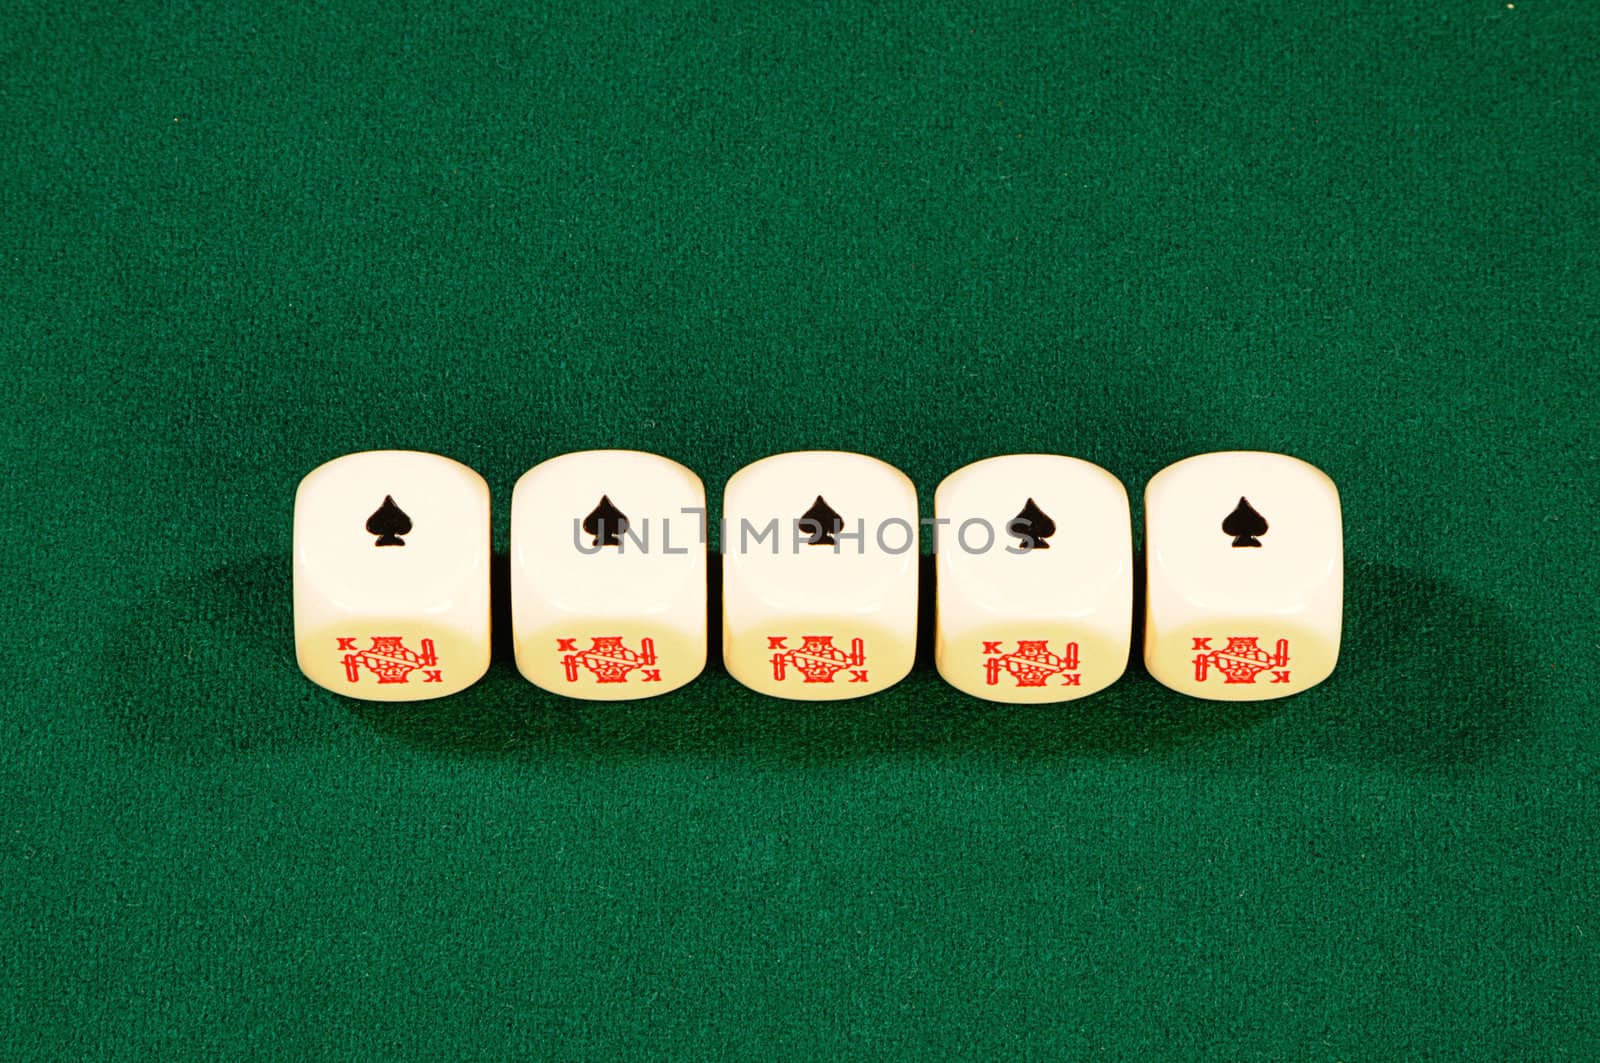 five dice on green felt